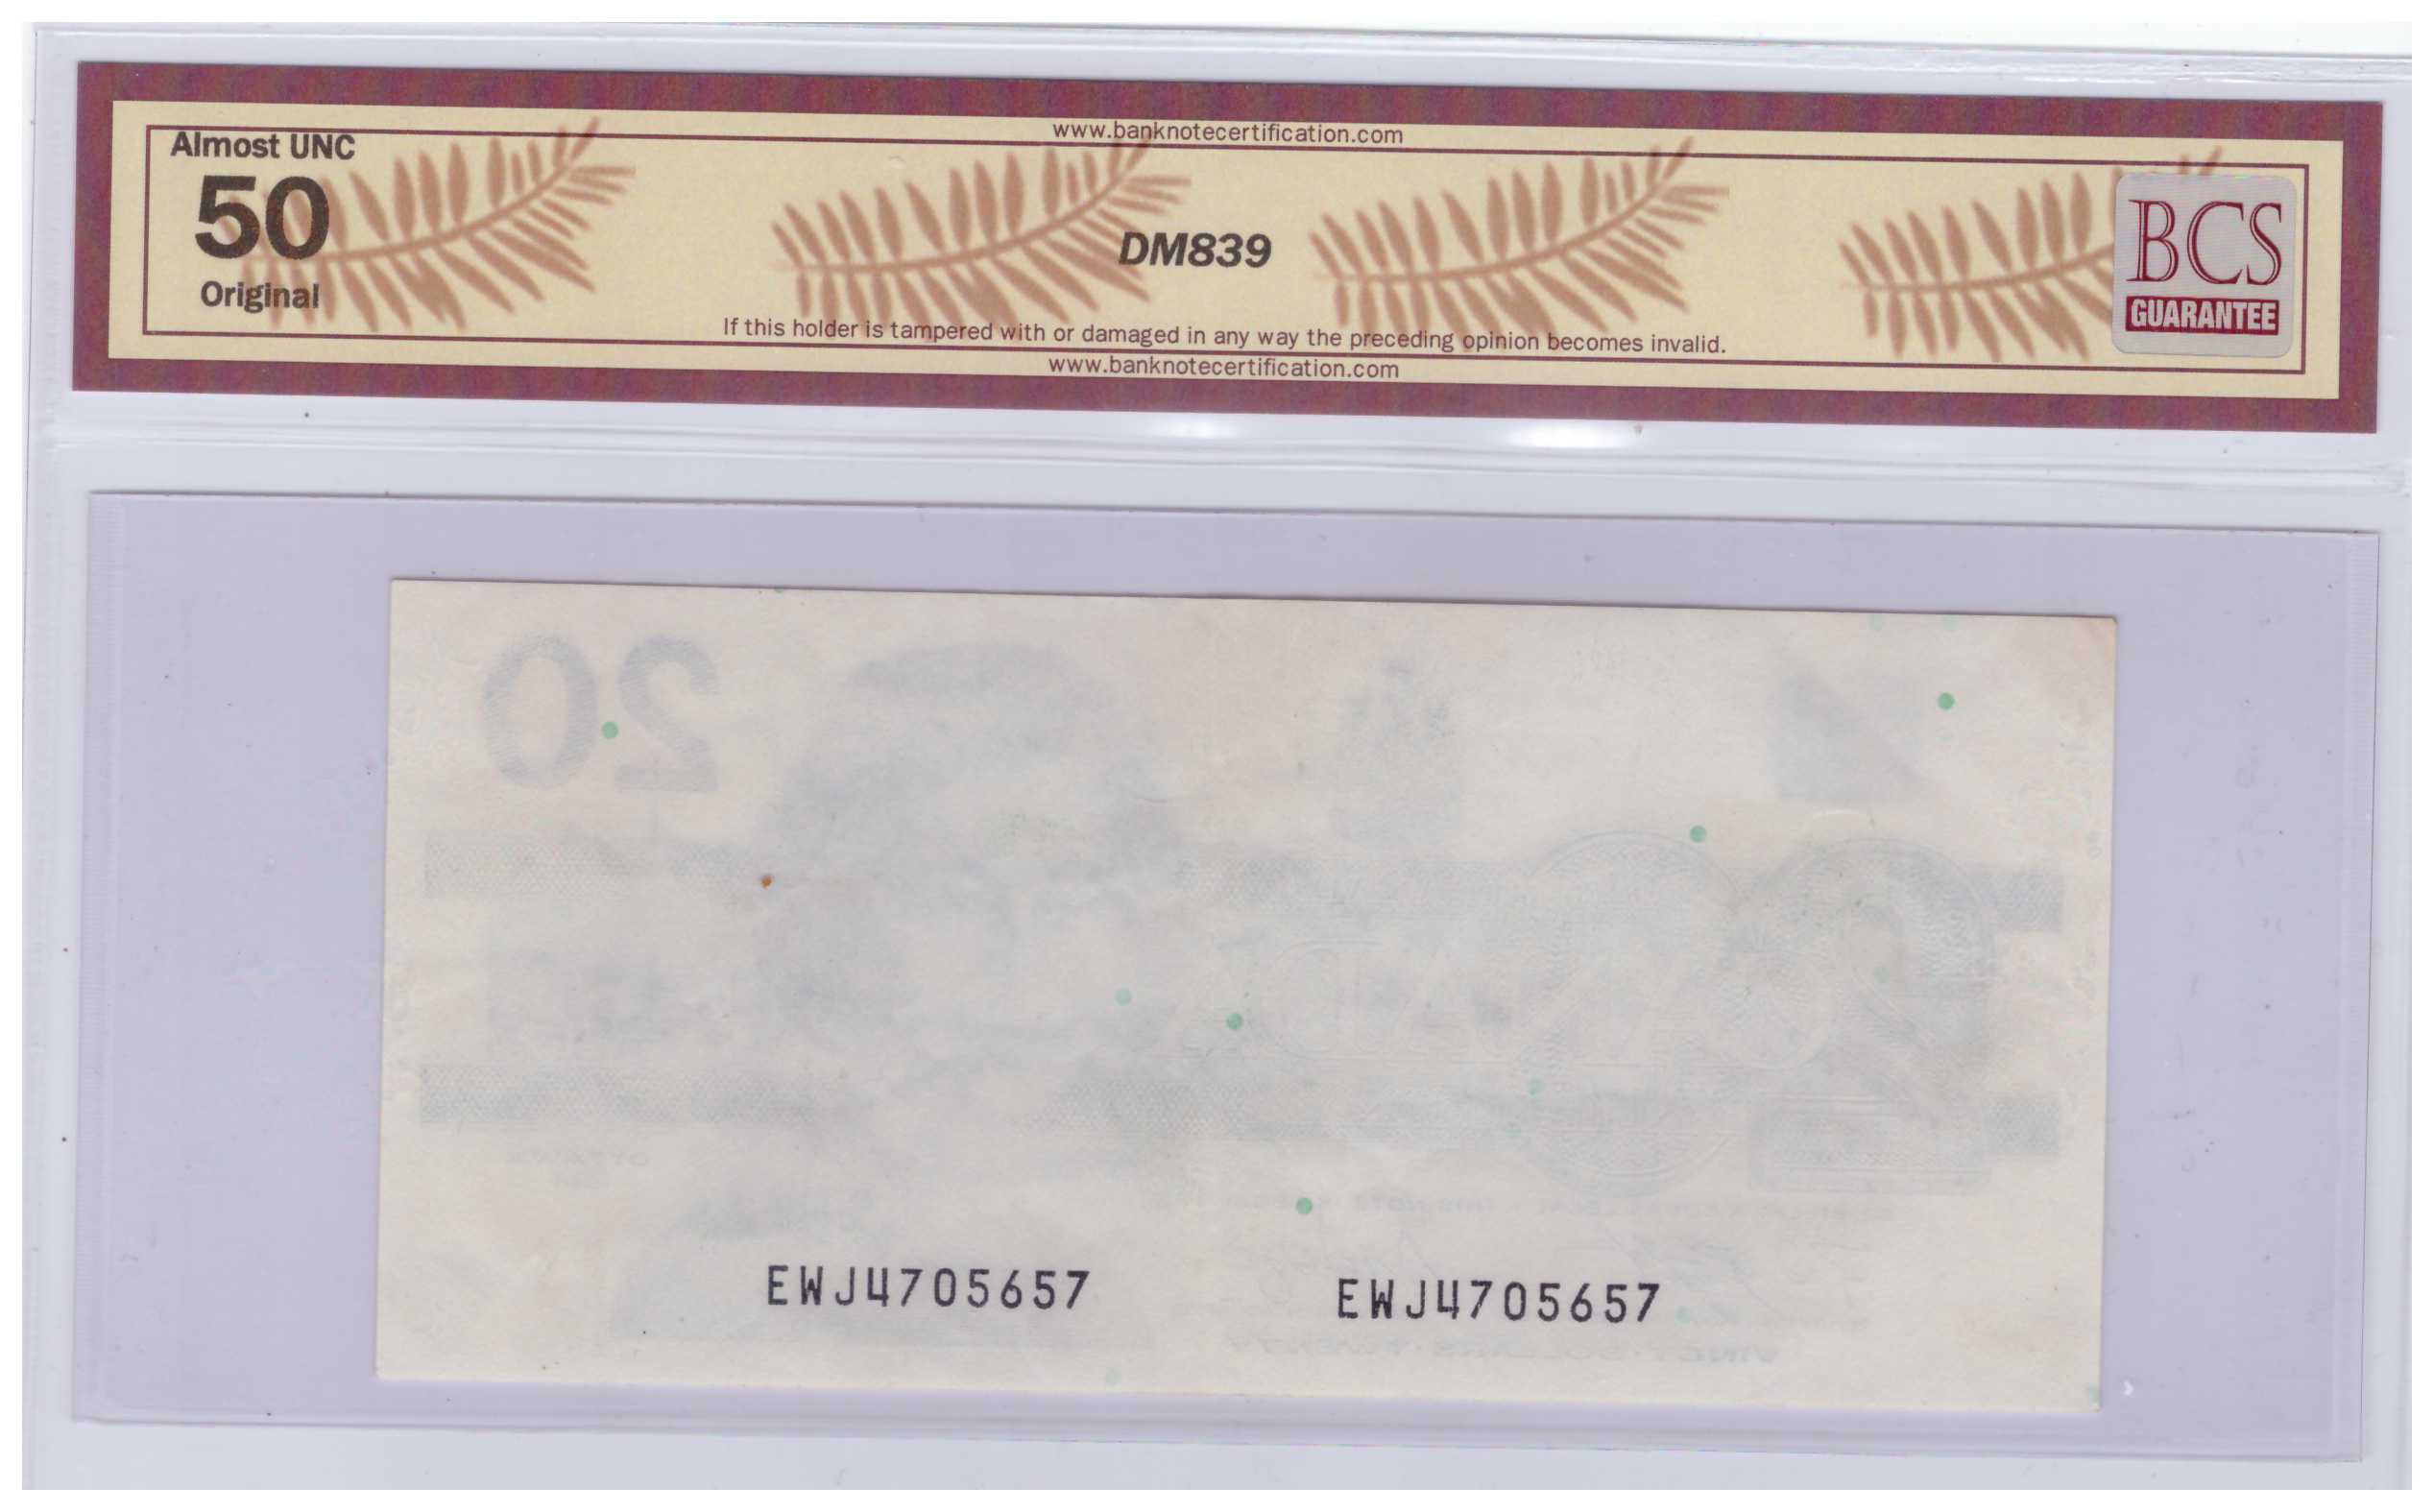 $20 - 1991 EWJ4705657 - Error 100% back missing - Missing background printing on front - Missing Bar codes - BCS Almost Unc 50.jpeg